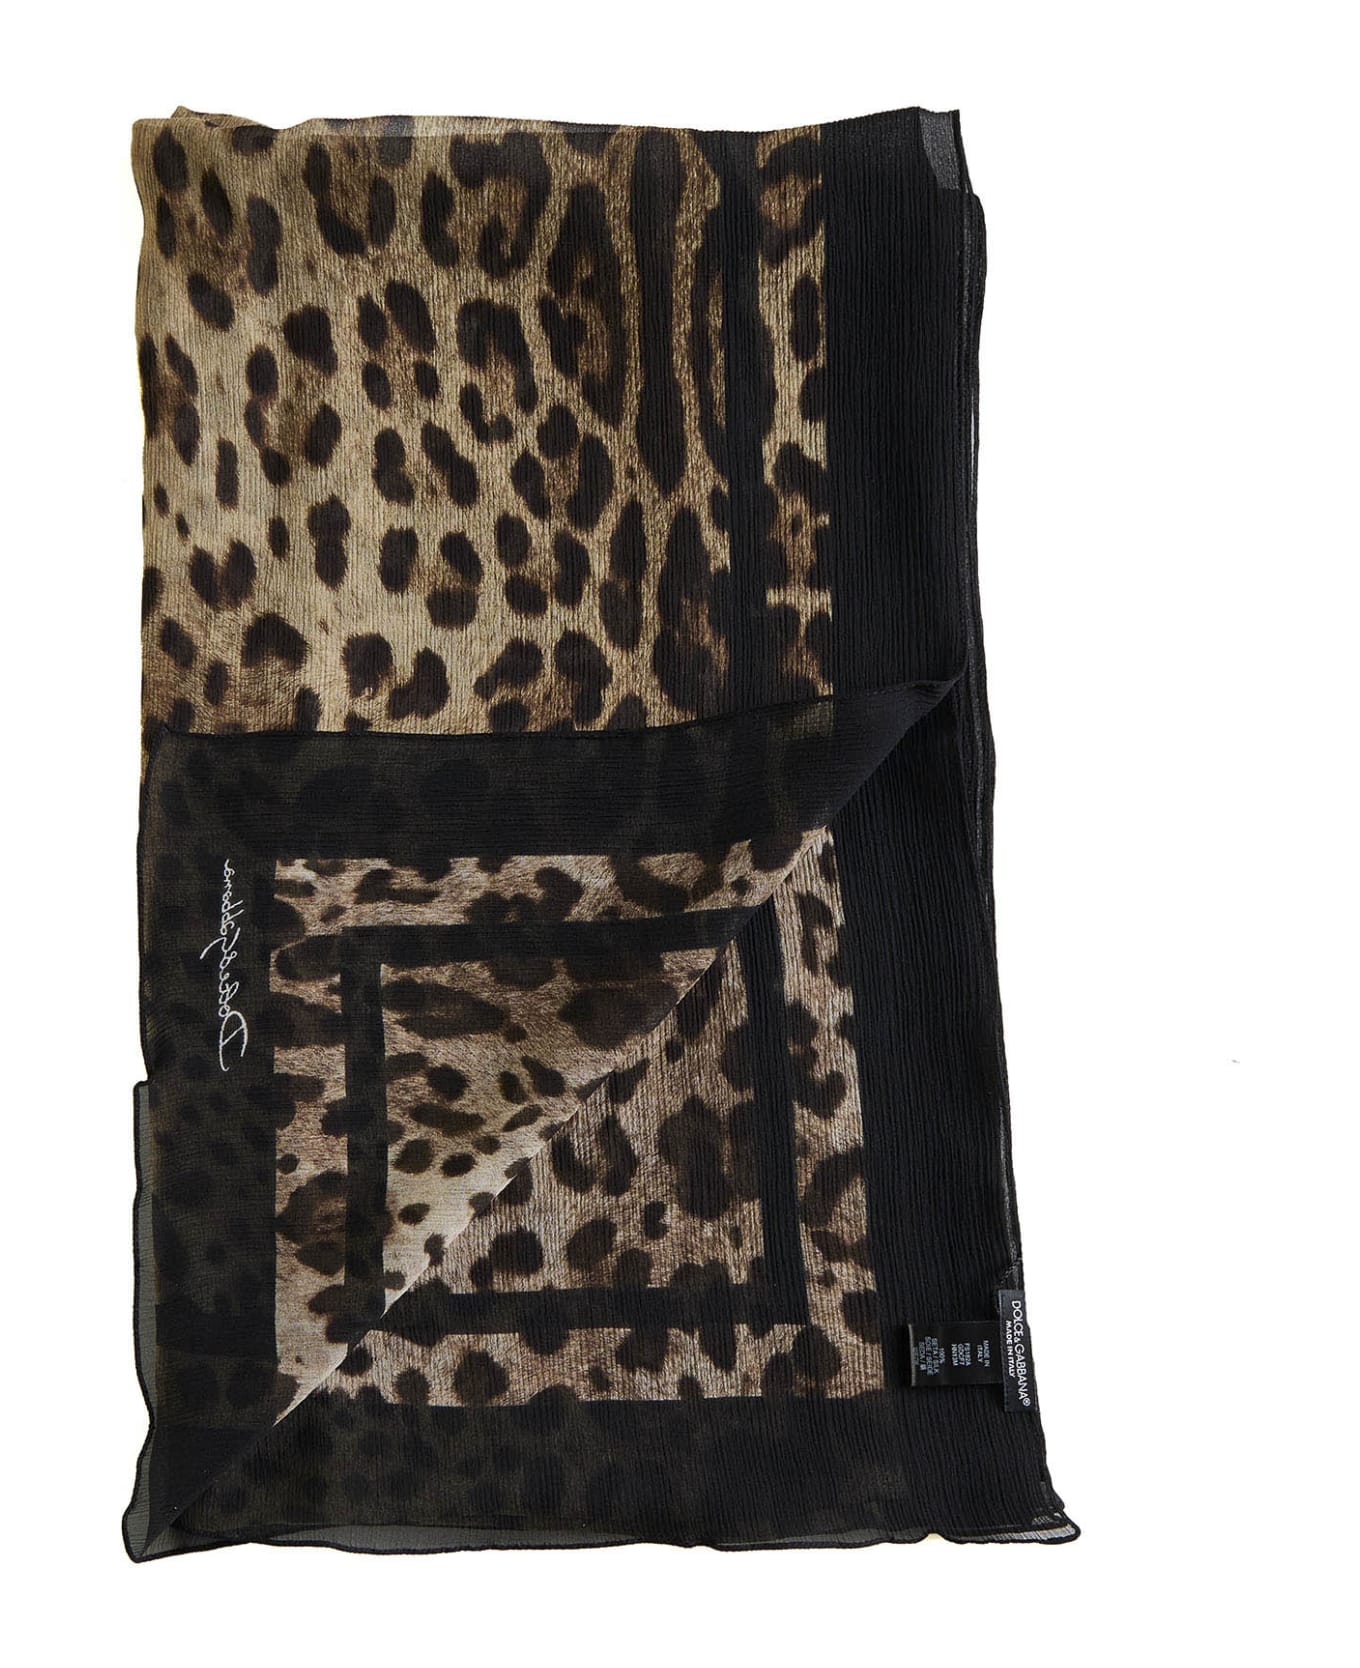 Dolce stripe & Gabbana 'leopard' Scarf - Dolce stripe & Gabbana crystal-embellished fringed top